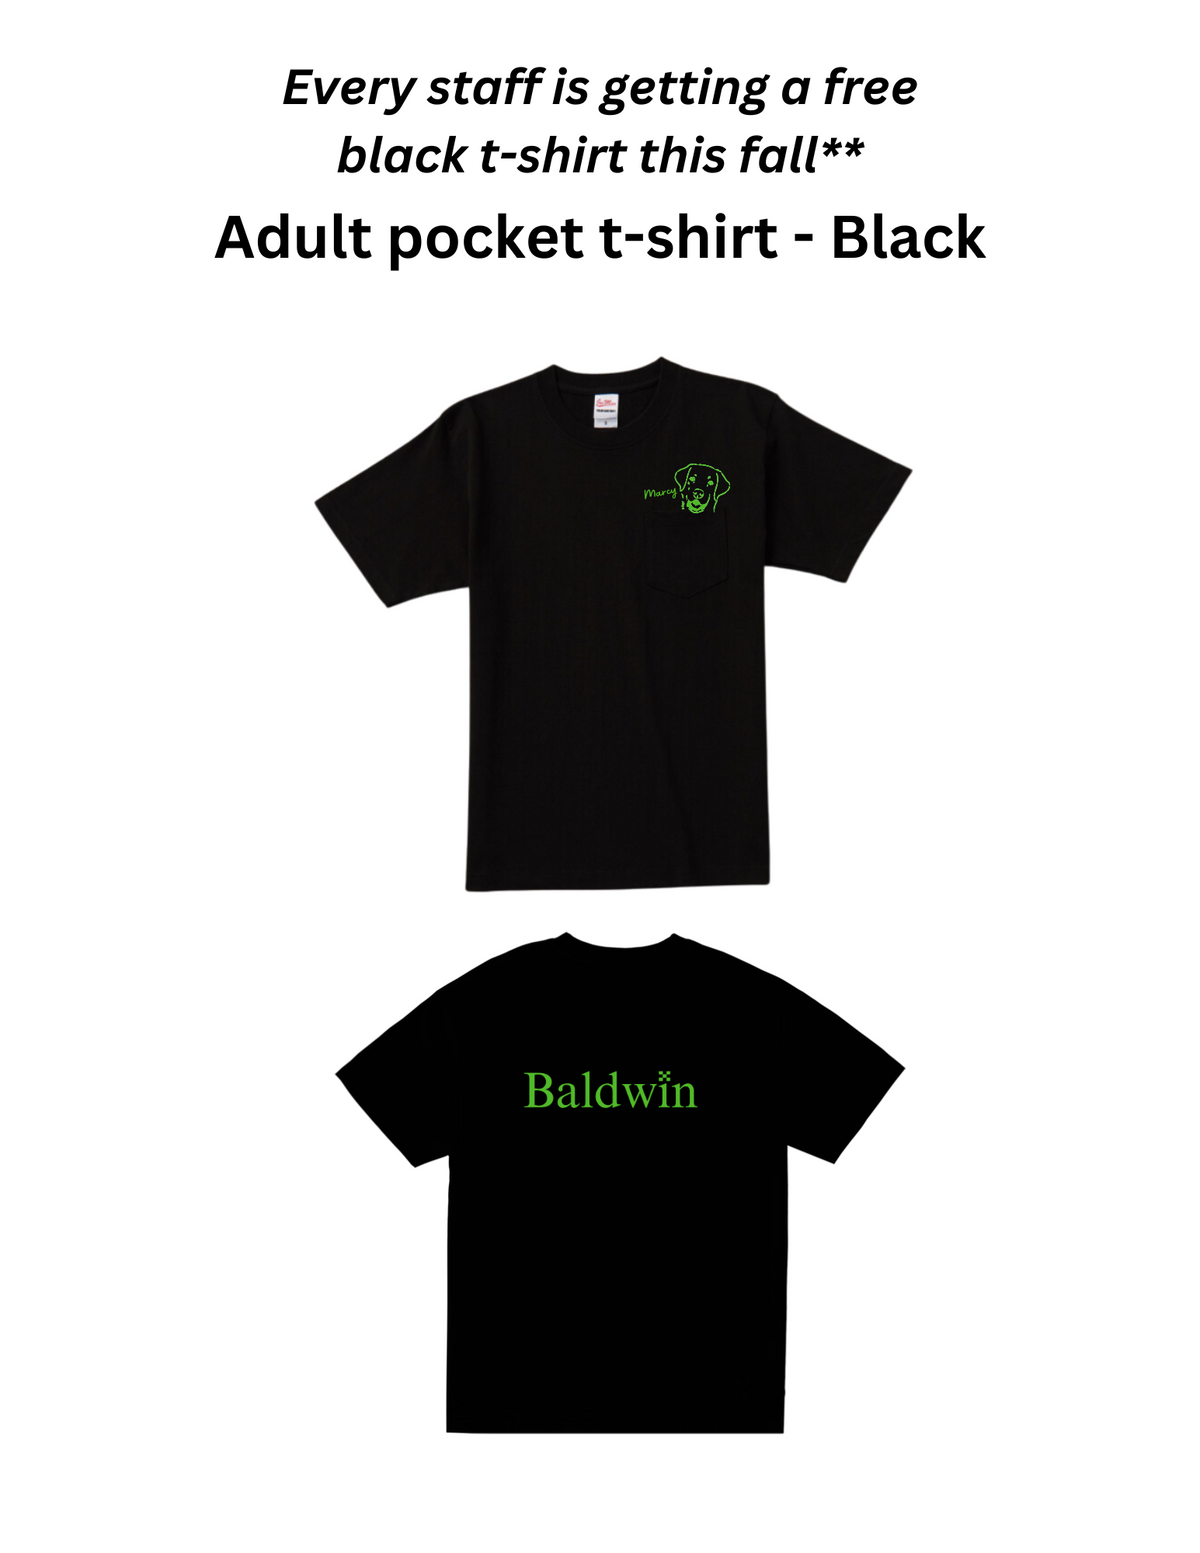 Baldwin Elementary School Swags - Adult Pocket T-shirt